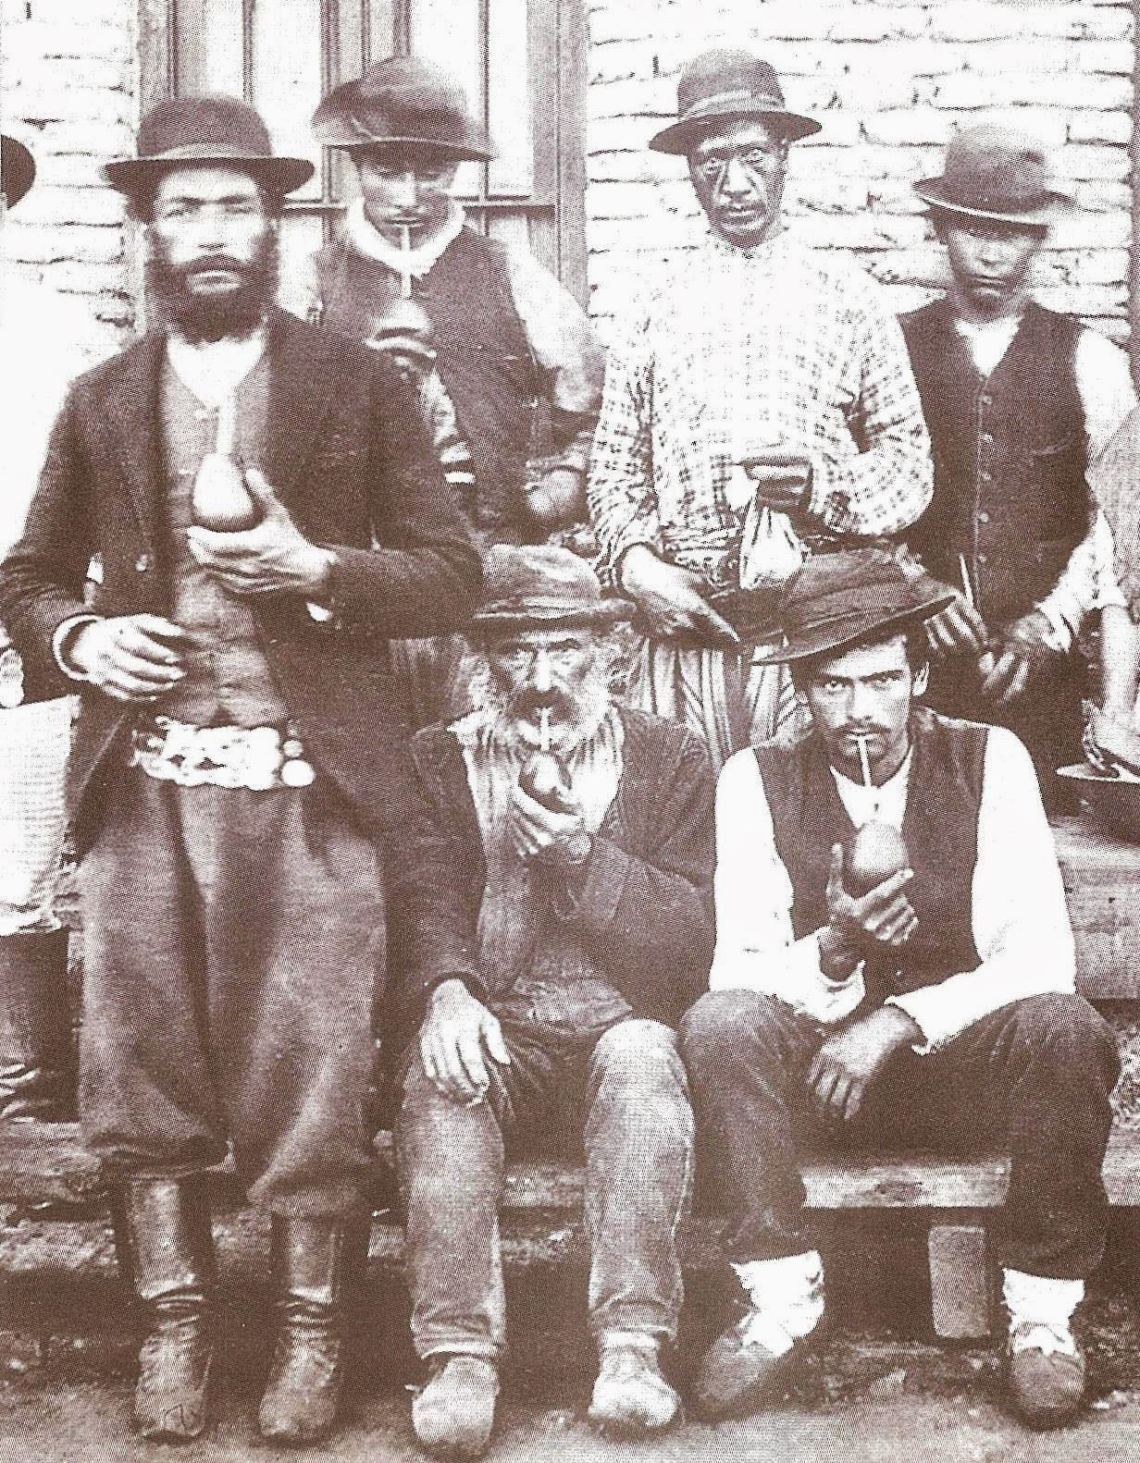 Black gauchos, Argentina, 1895